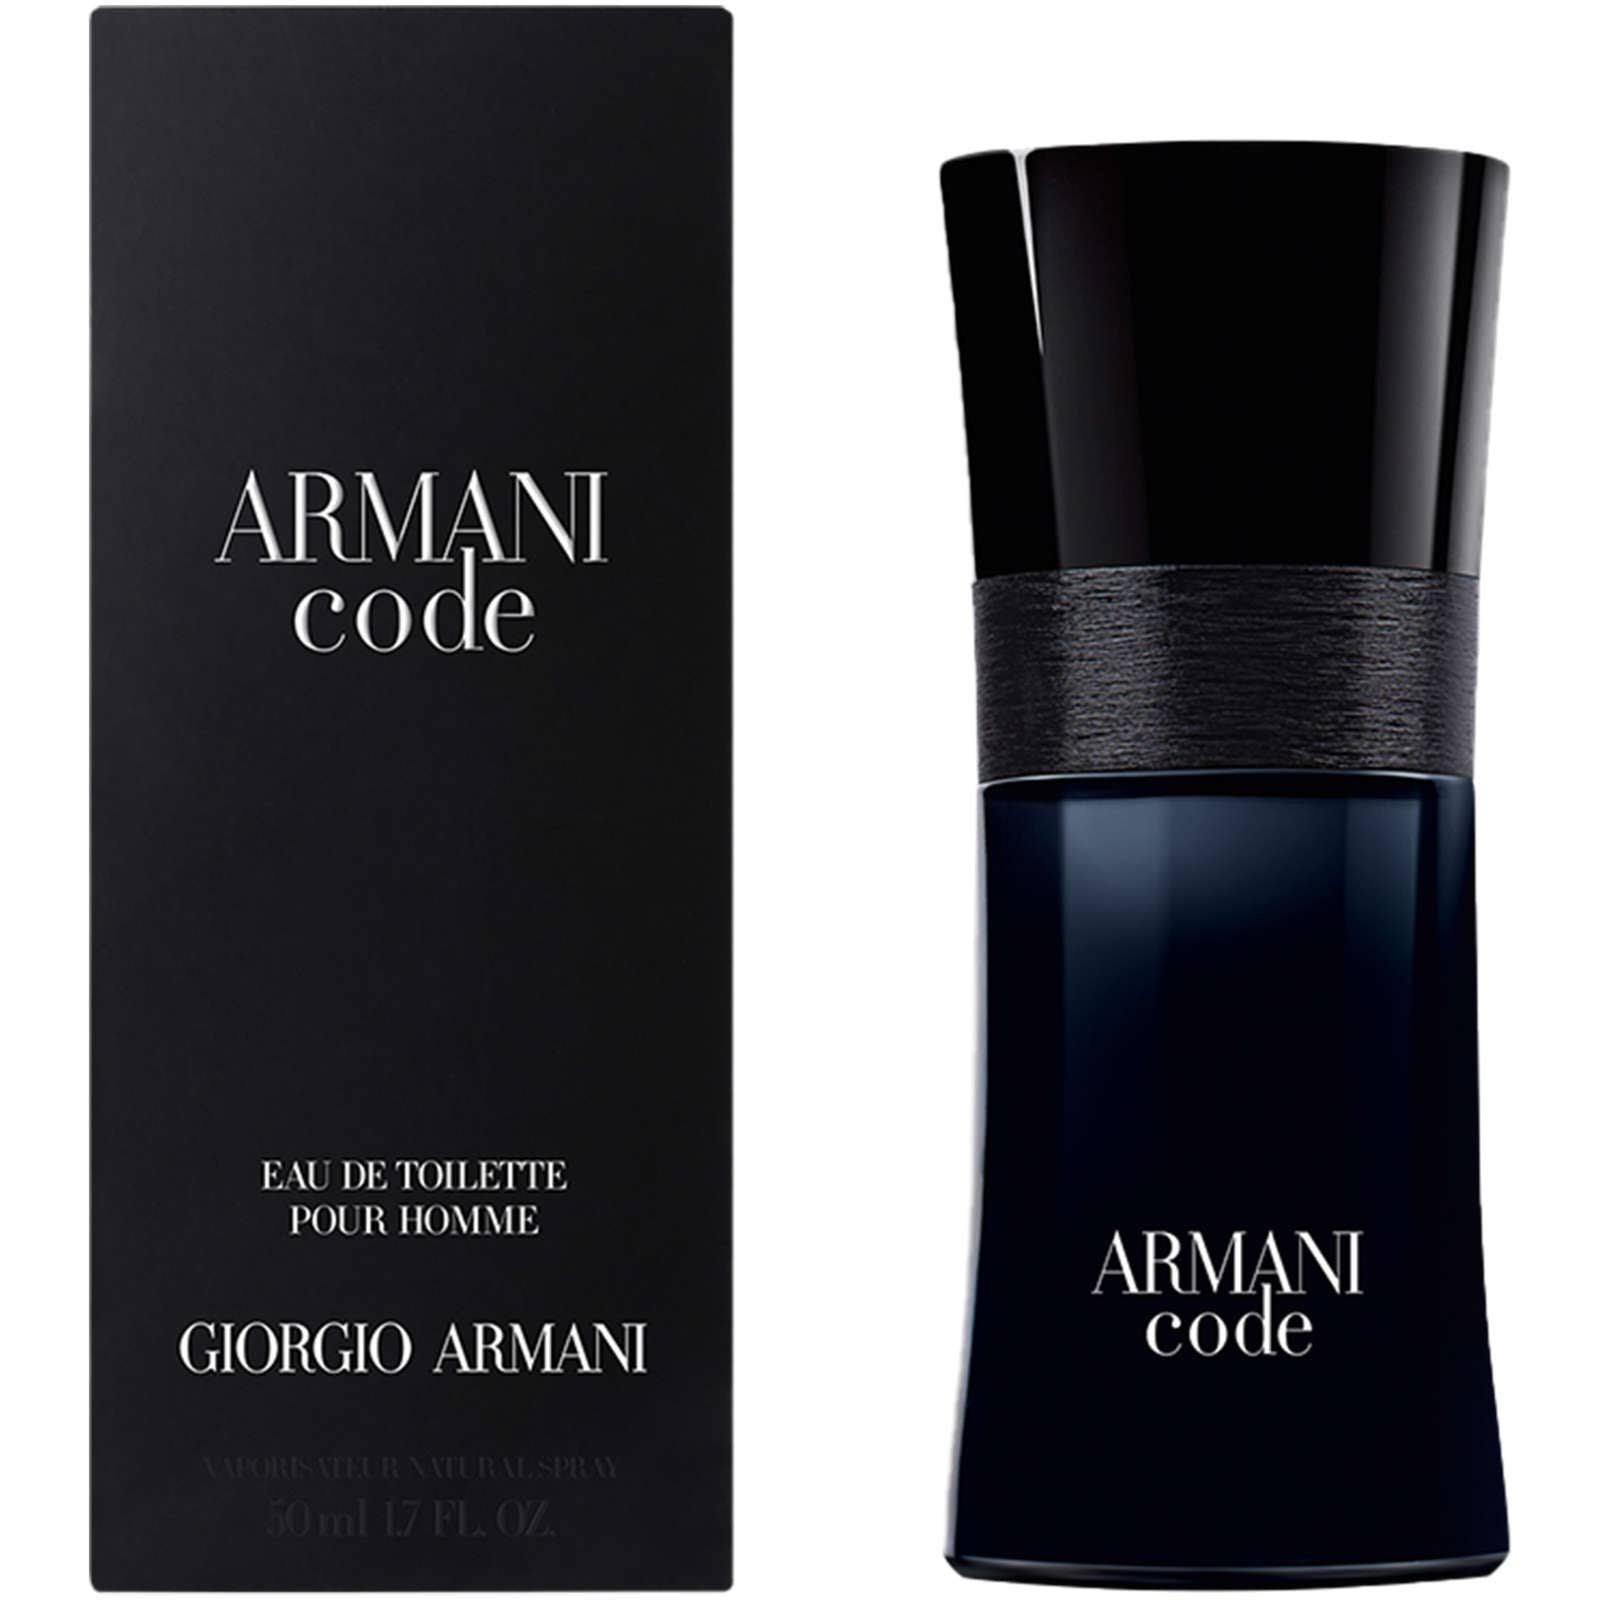 Giorgio Armani Armani Code Men's Eau De Toilette Spray - 1.7oz